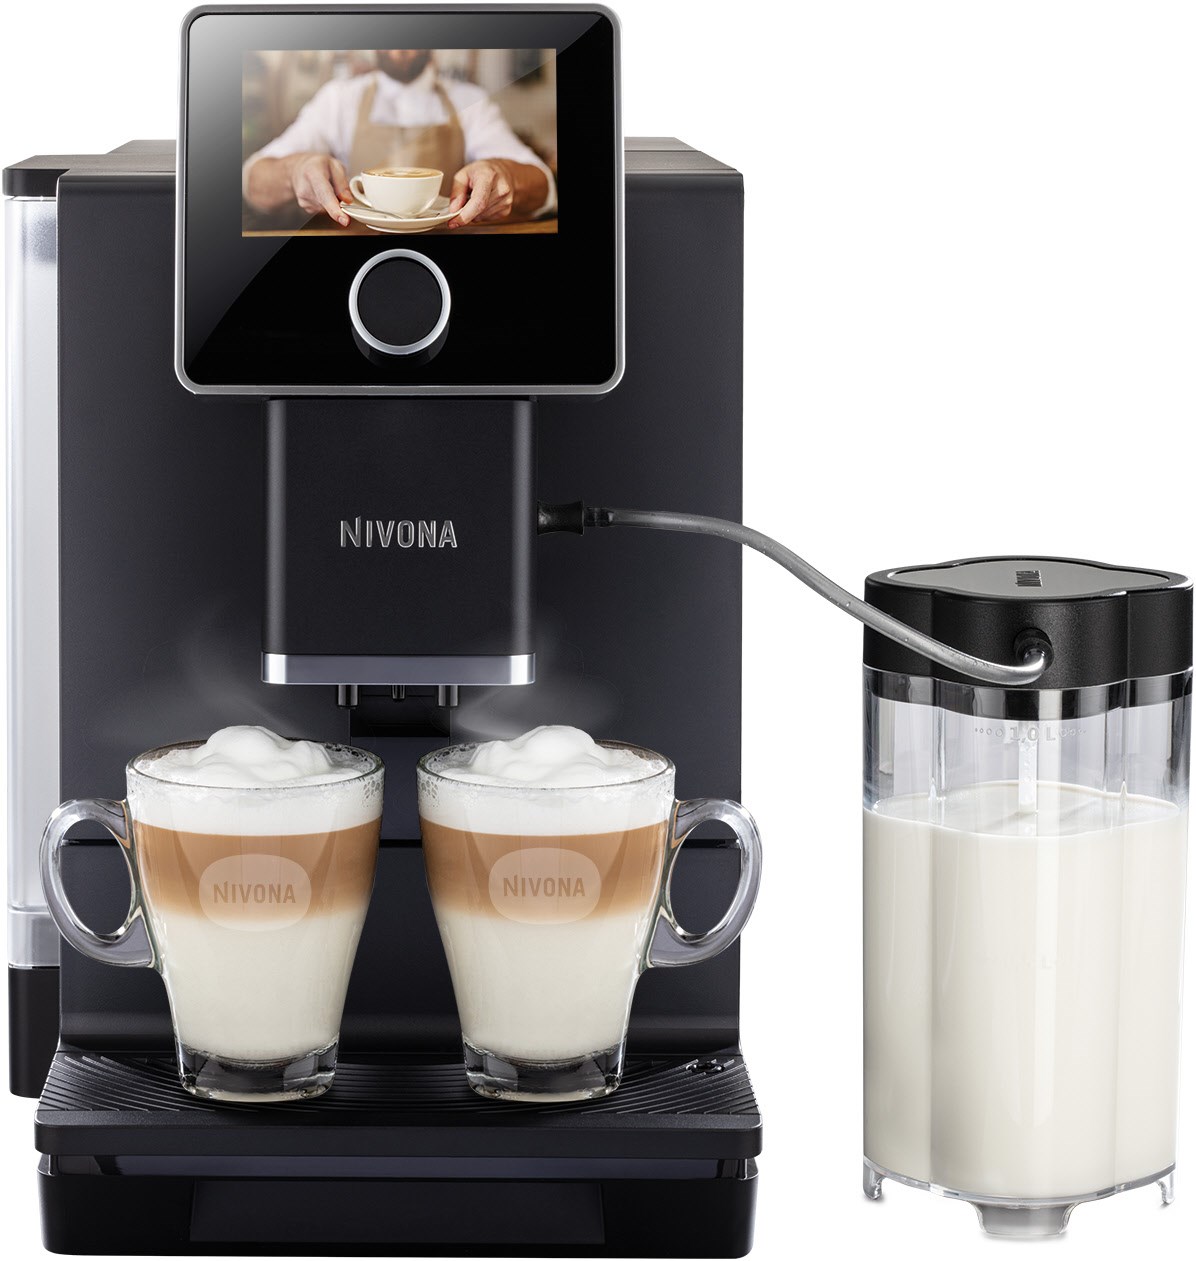 Nivona Kaffeevollautomat CafeRomatica NICR 960 // 1kg Nivona Kaffee gratis